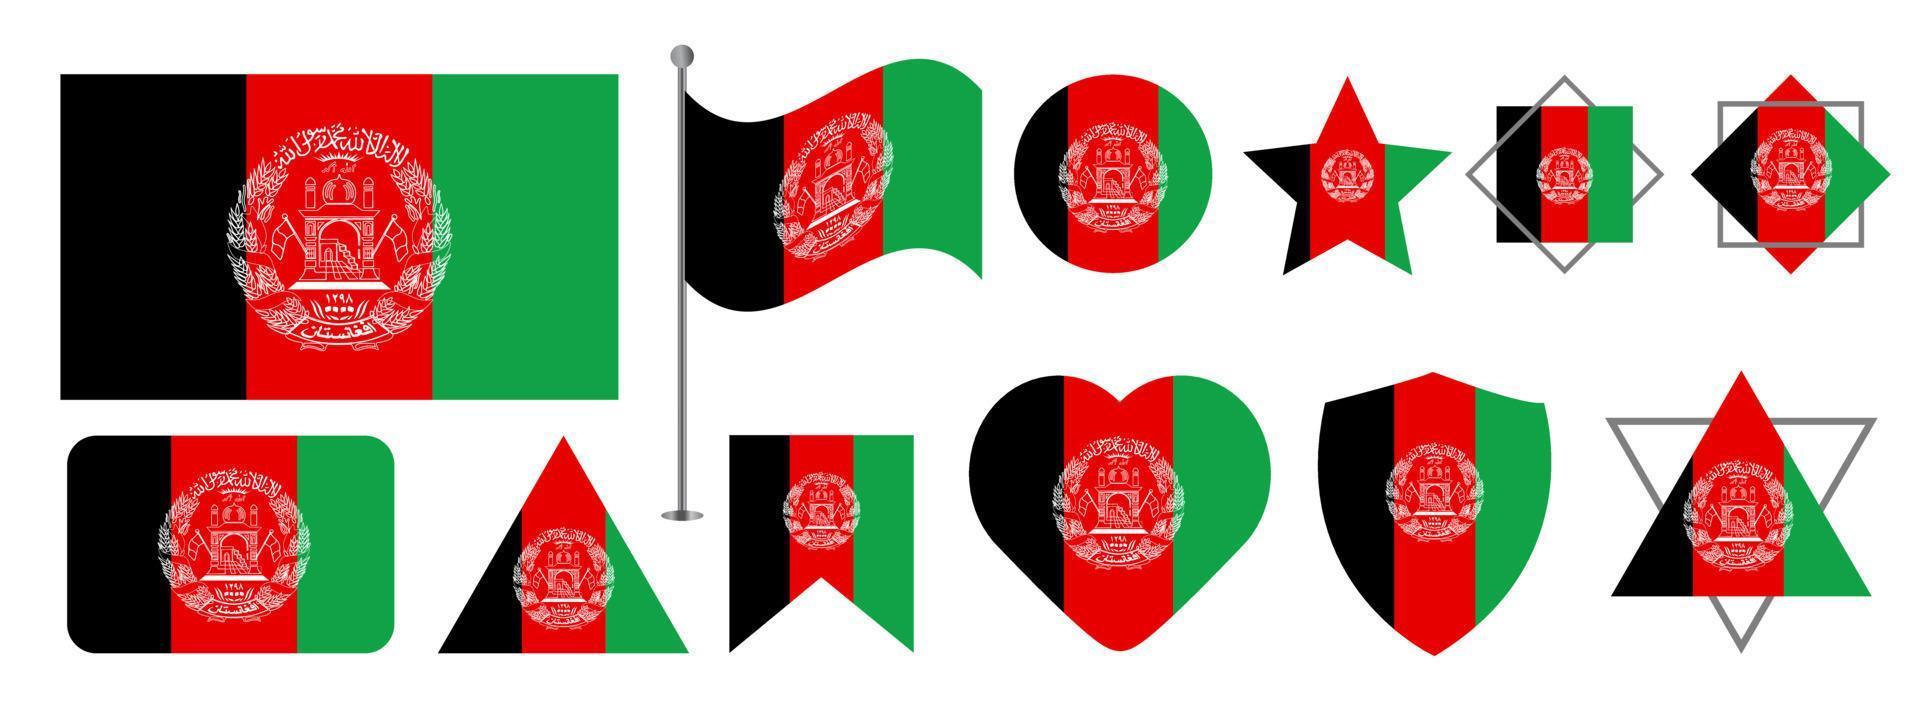 Design der afghanischen Flagge. afghanischer nationalflaggenvektordesignsatz. afghanistan-flaggenvektorillustration vektor